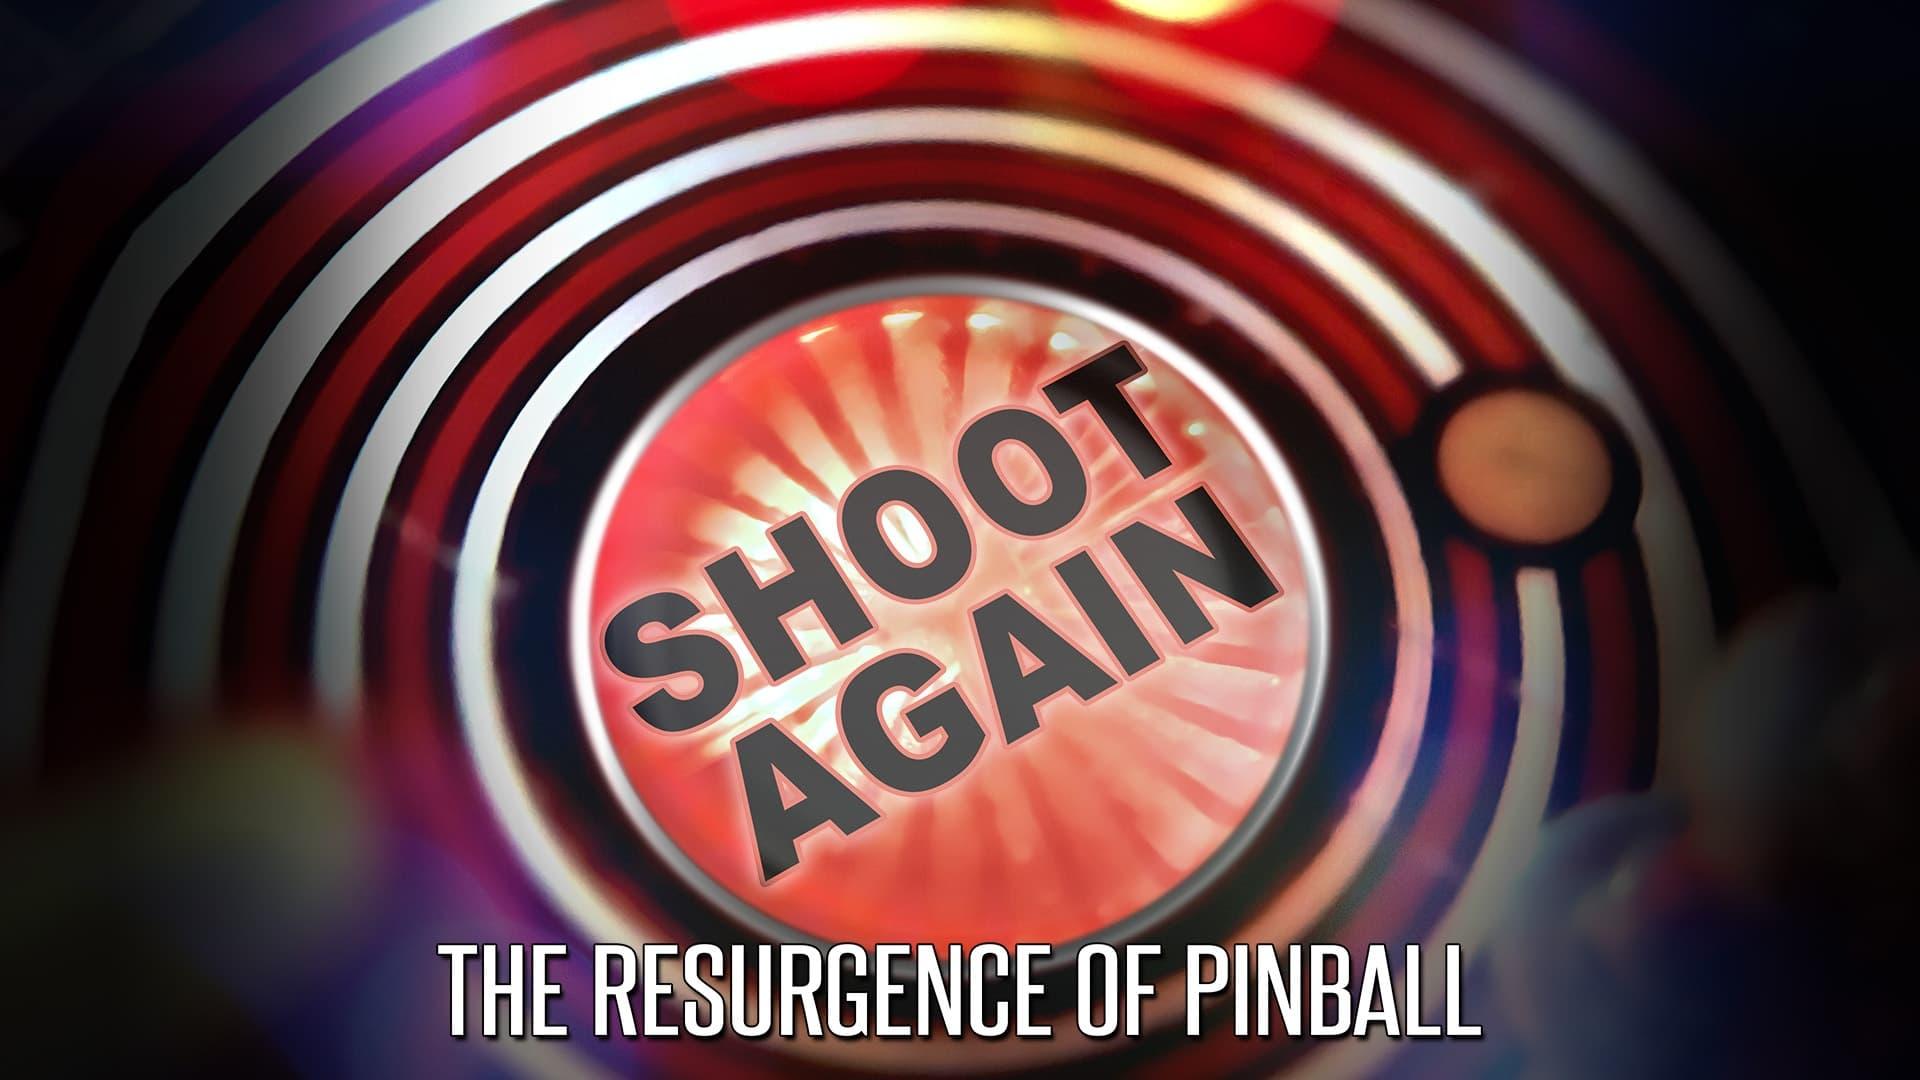 Shoot Again: The Resurgence of Pinball backdrop